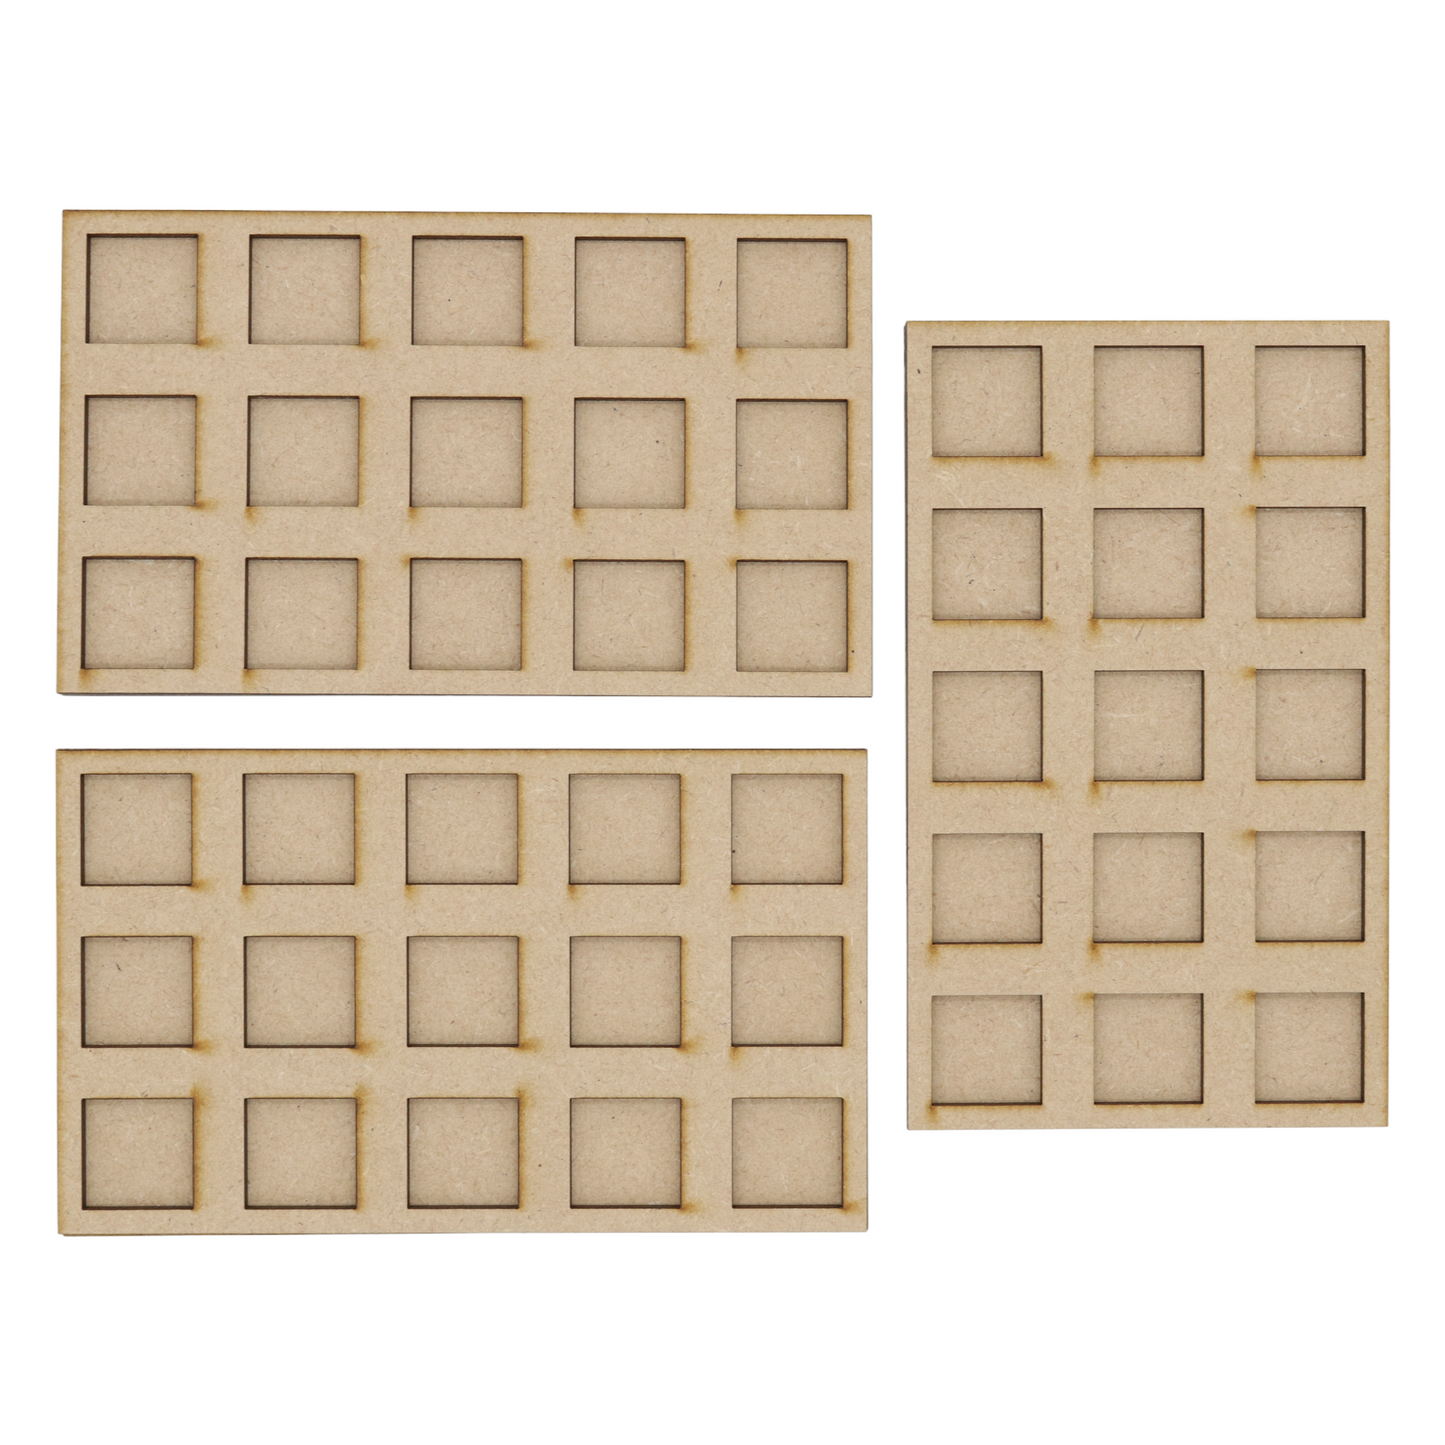 5x3 - 20mm Square Movement Tray